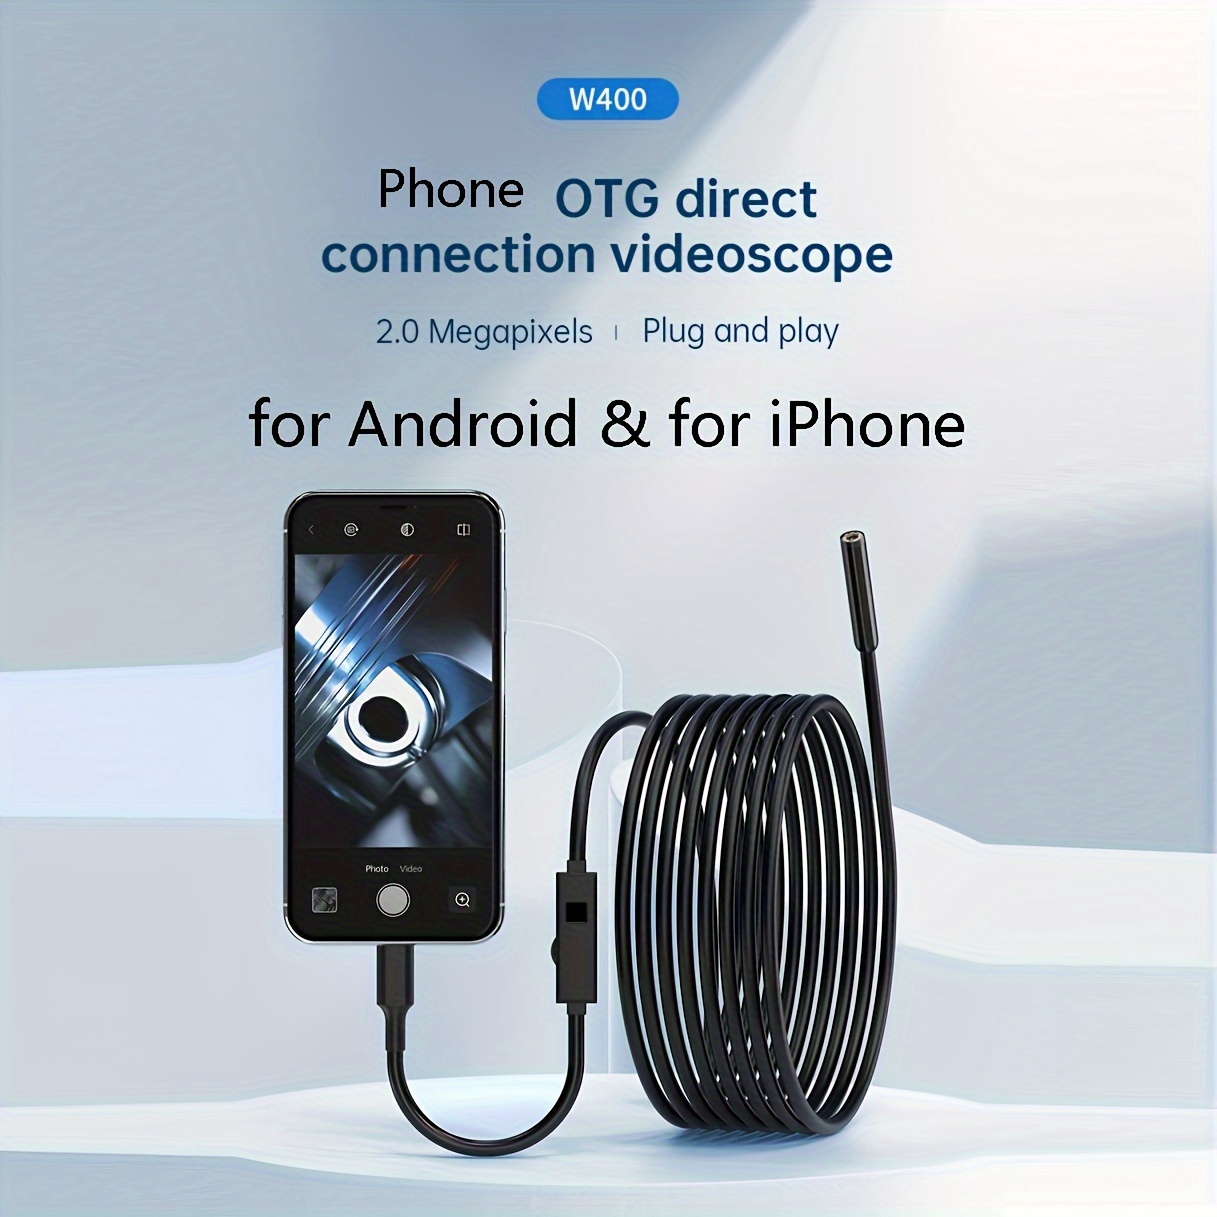 Caméra d'endoscope pour Android - Endoscope - Caméra d'inspection - Caméra  - Caméra